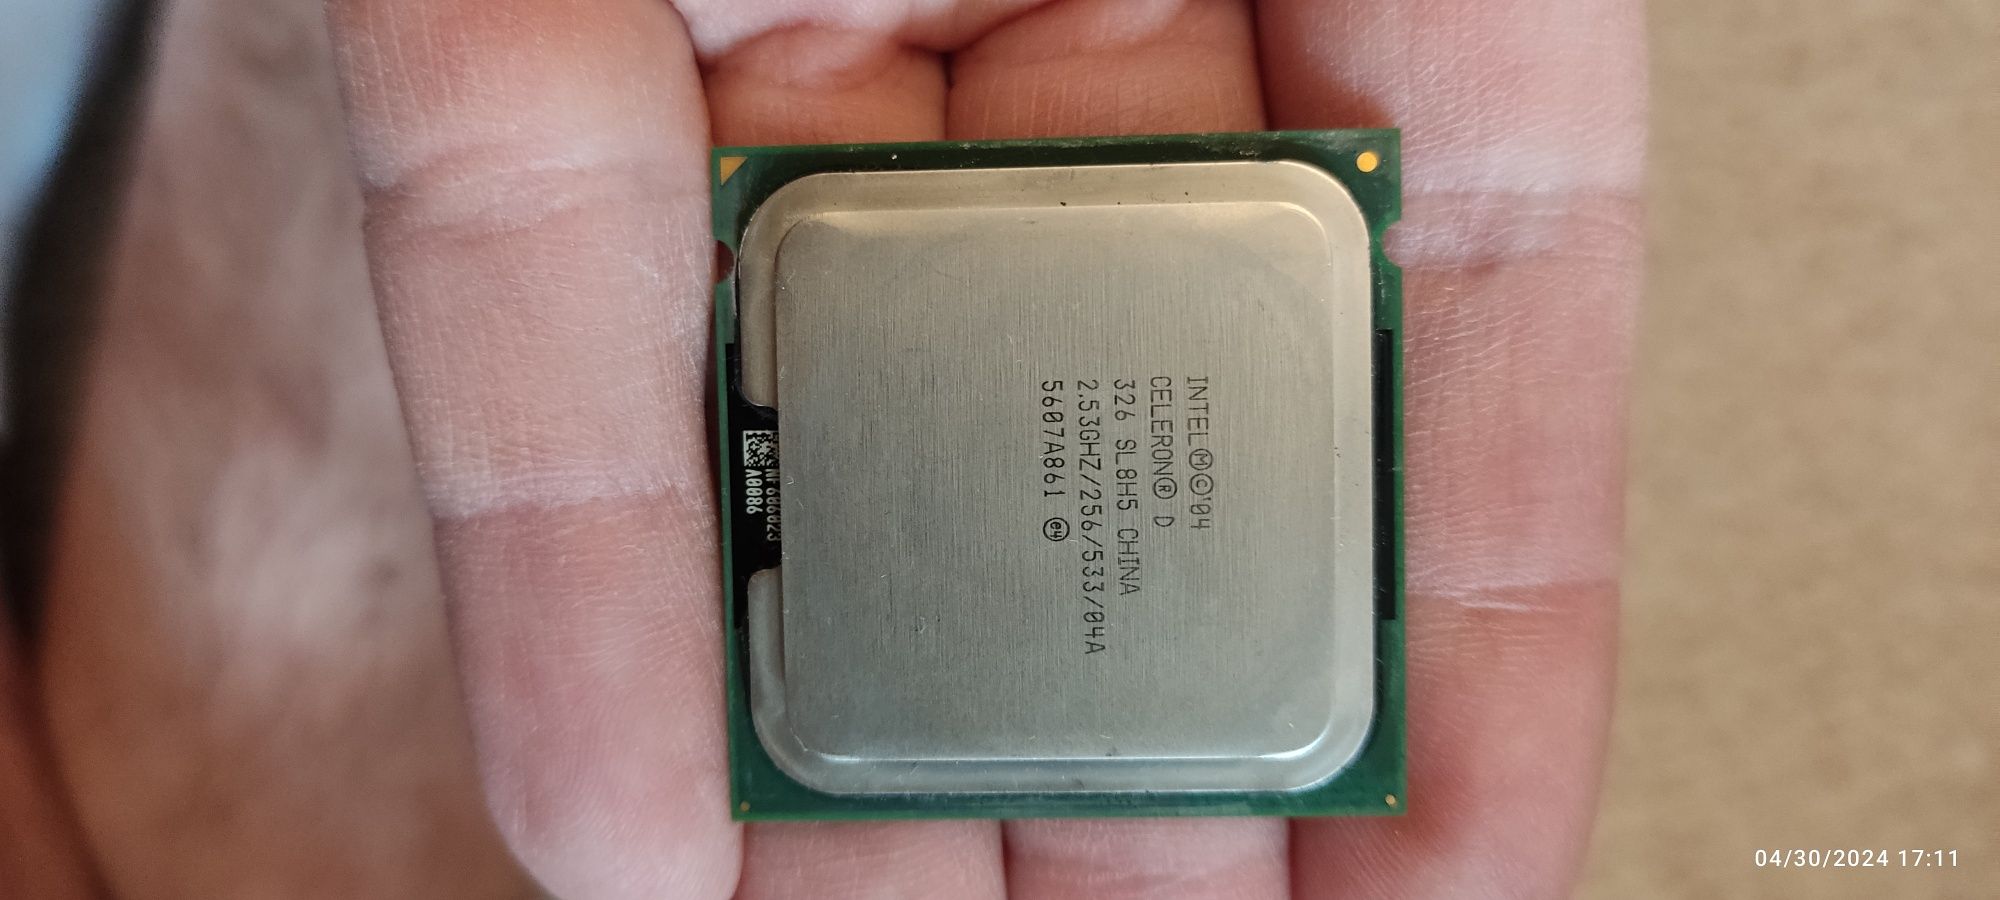 Intel Celeron D Processor 326
256K Cache, 2.53 GHz, 533 MHz FSB